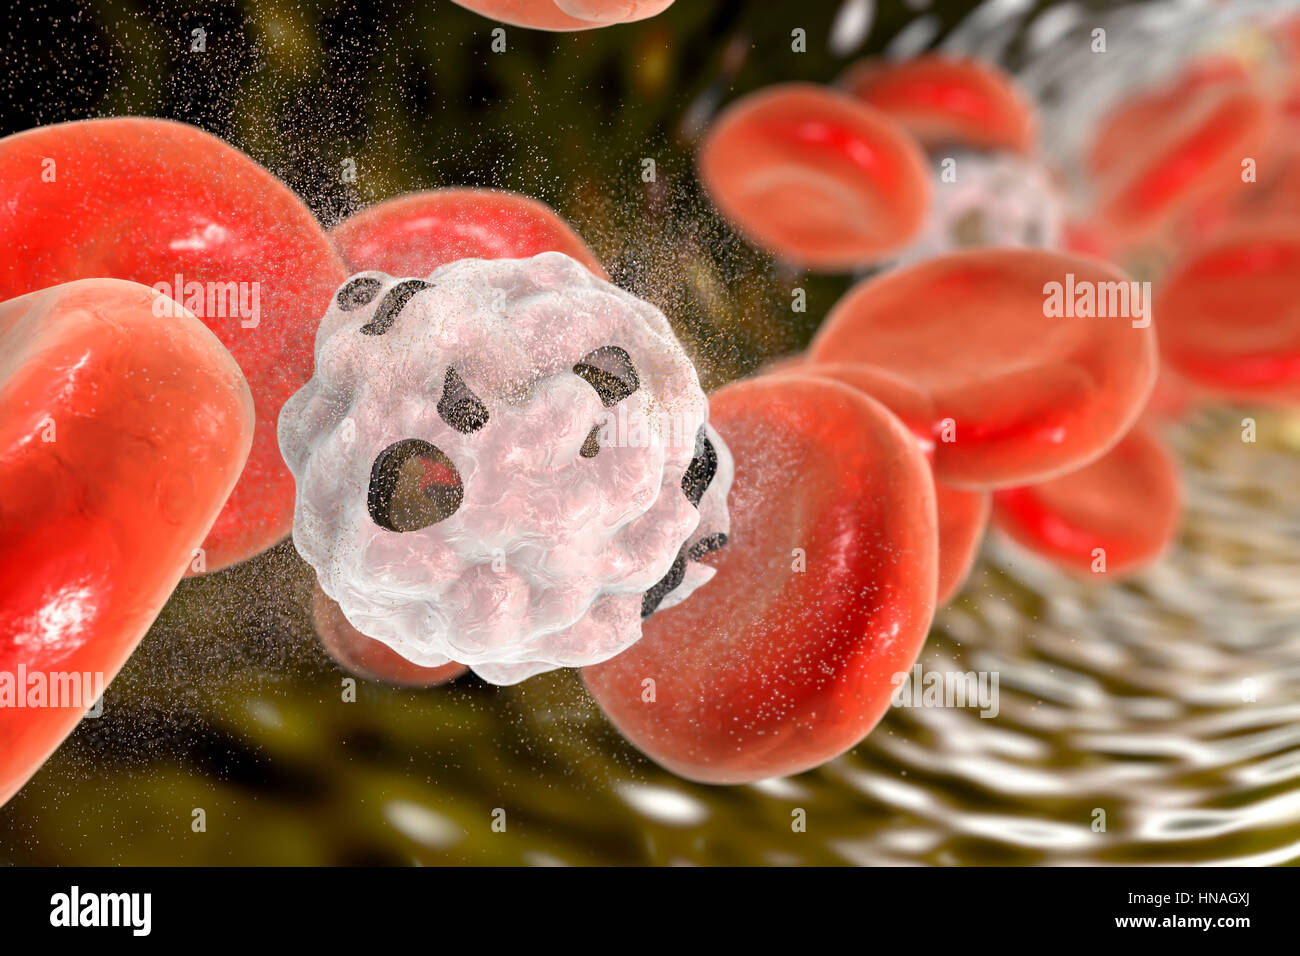 Destruction of white blood cell, illustration. Stock Photo